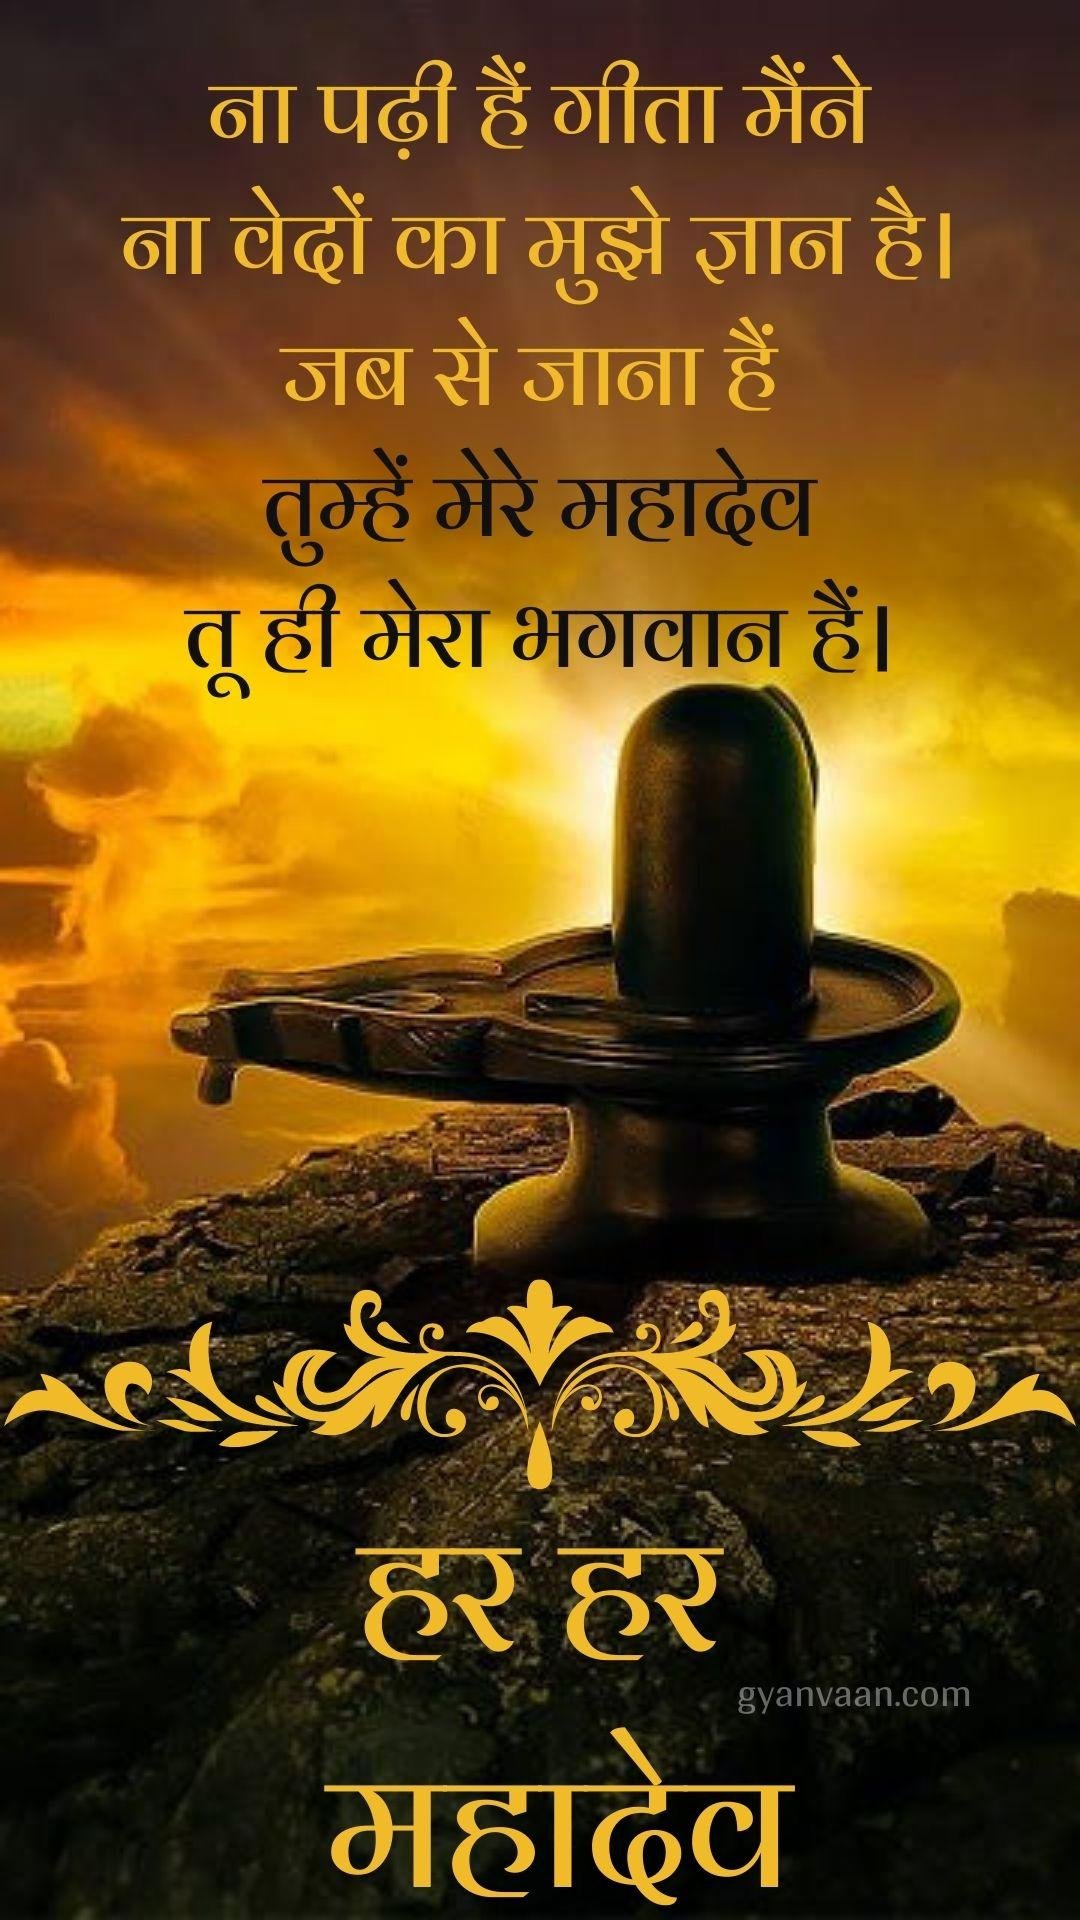 Lord Shiva Mahadev Quotes And Mahakal Status In Hindi For Mobile 3 - Shiva Quotes